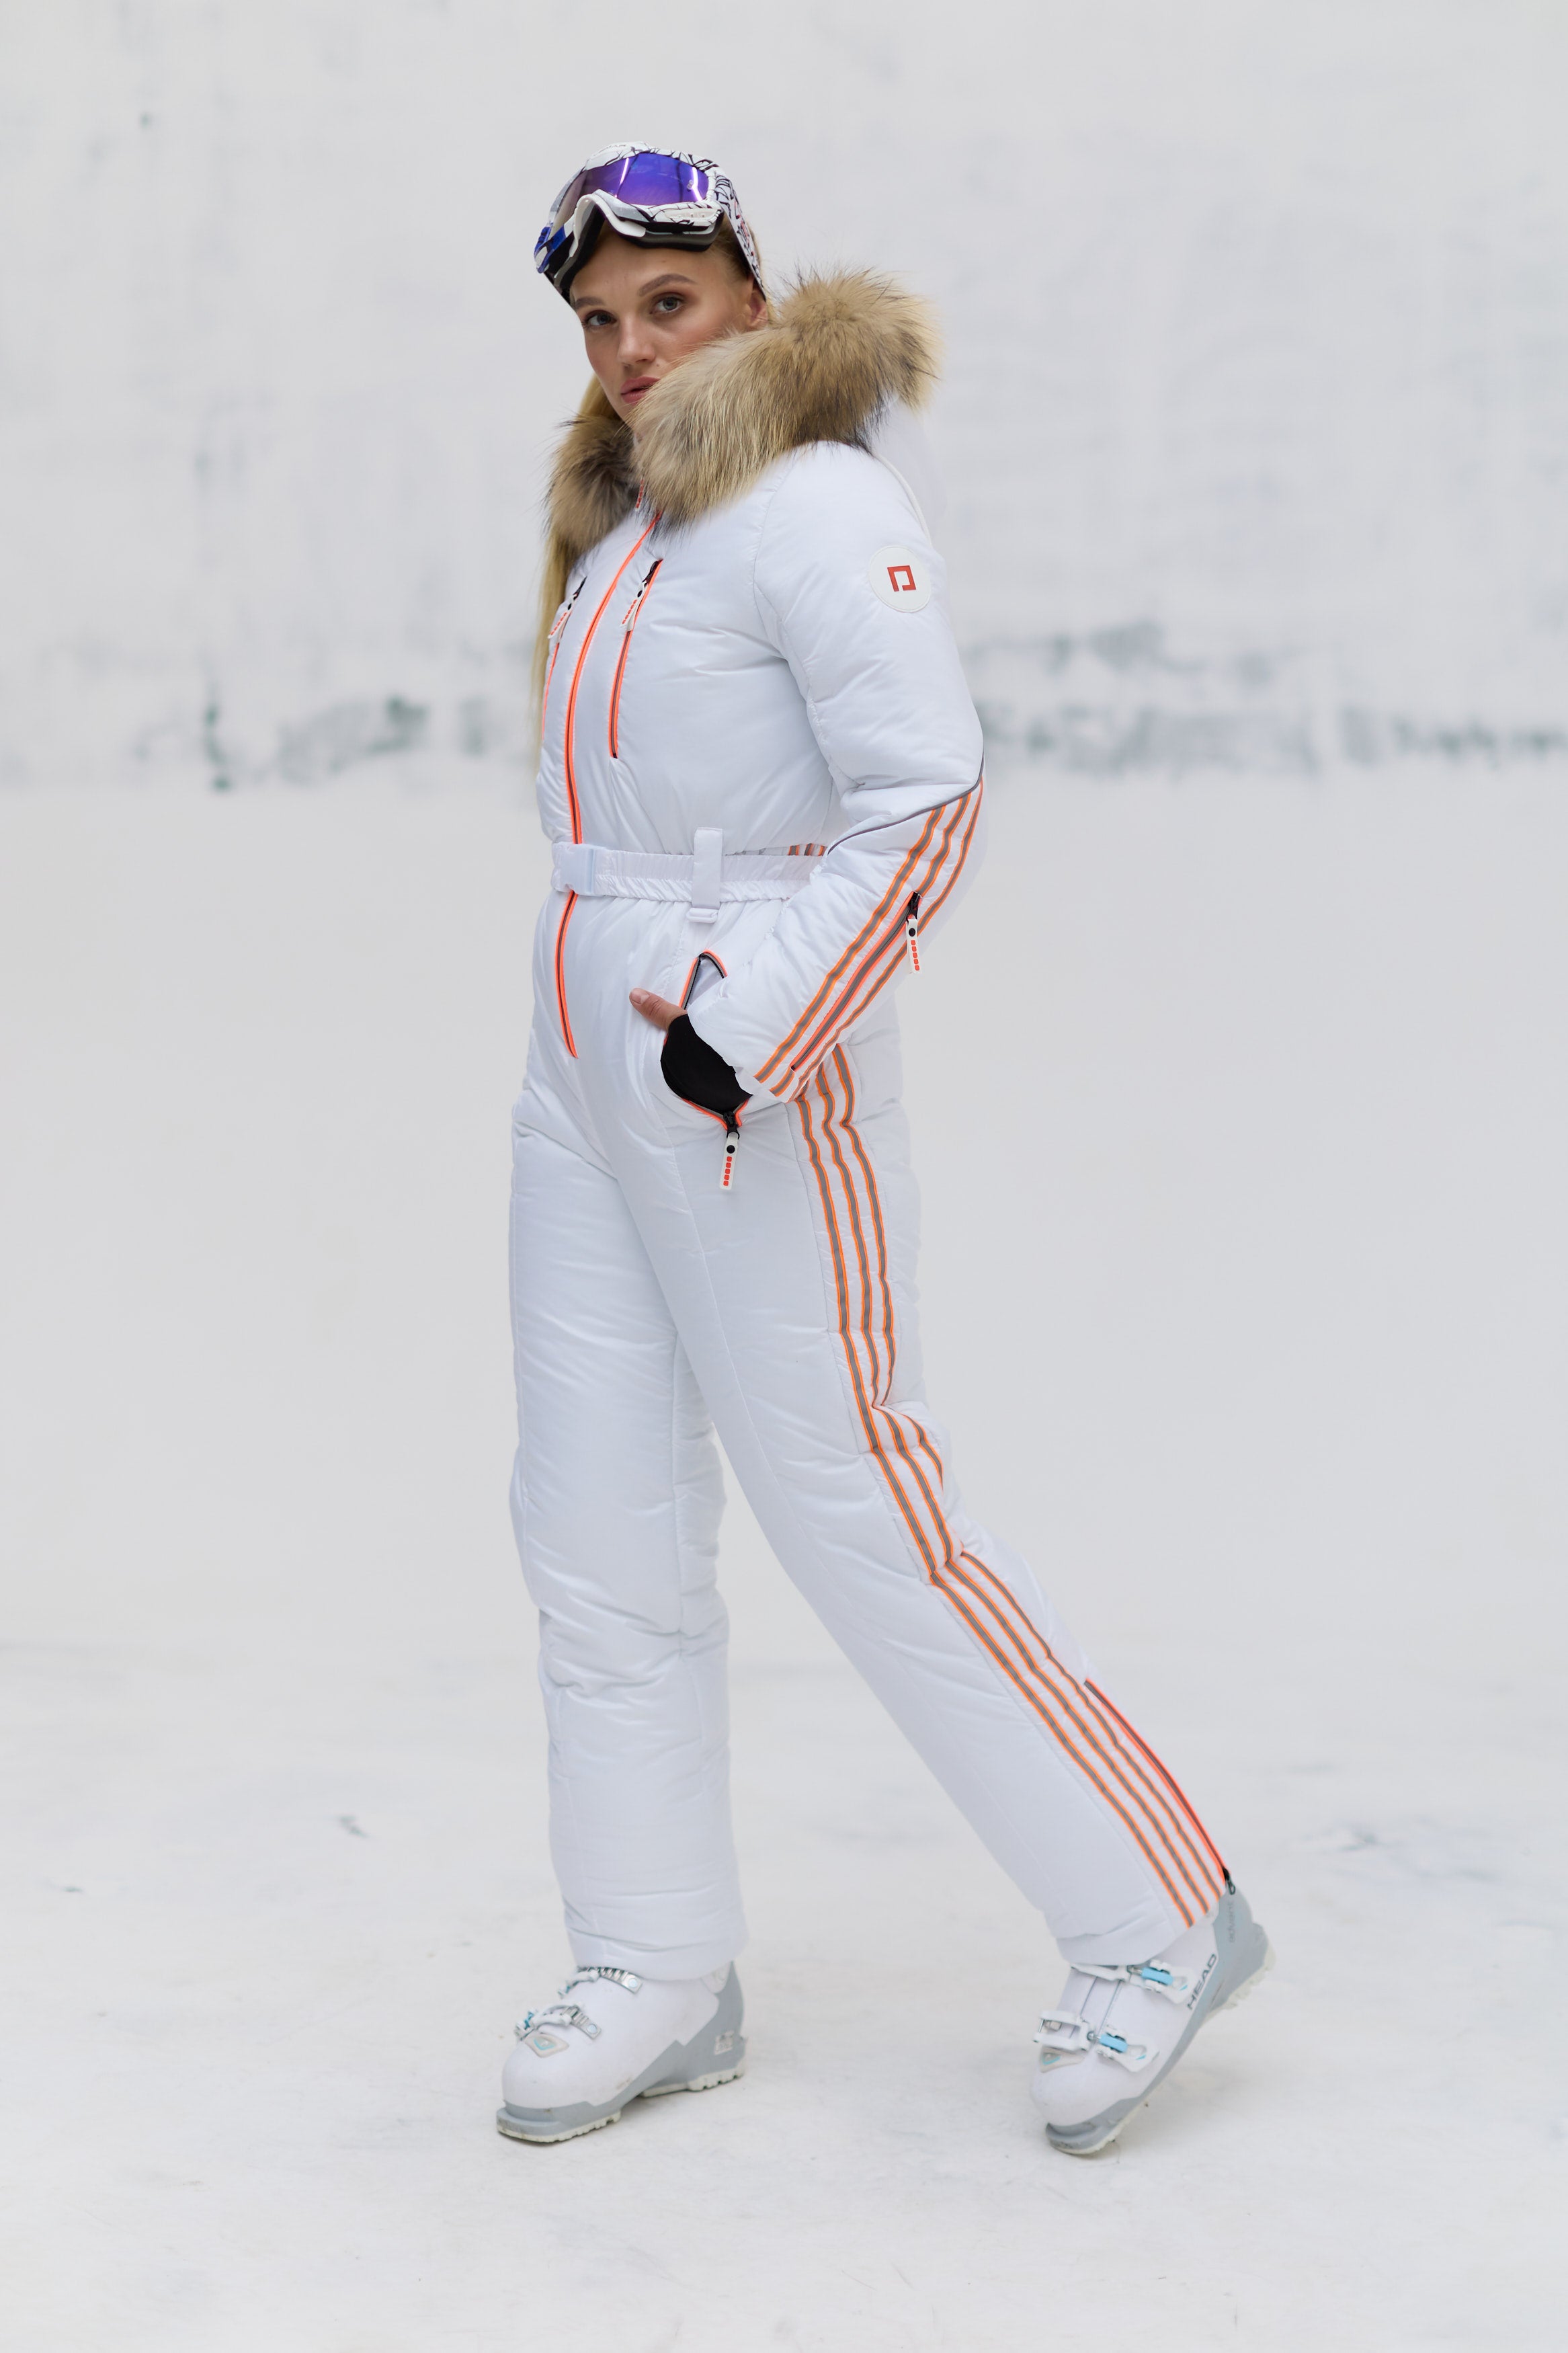 Buy ERIN SNOW Luna Ski Suit - White At 40% Off